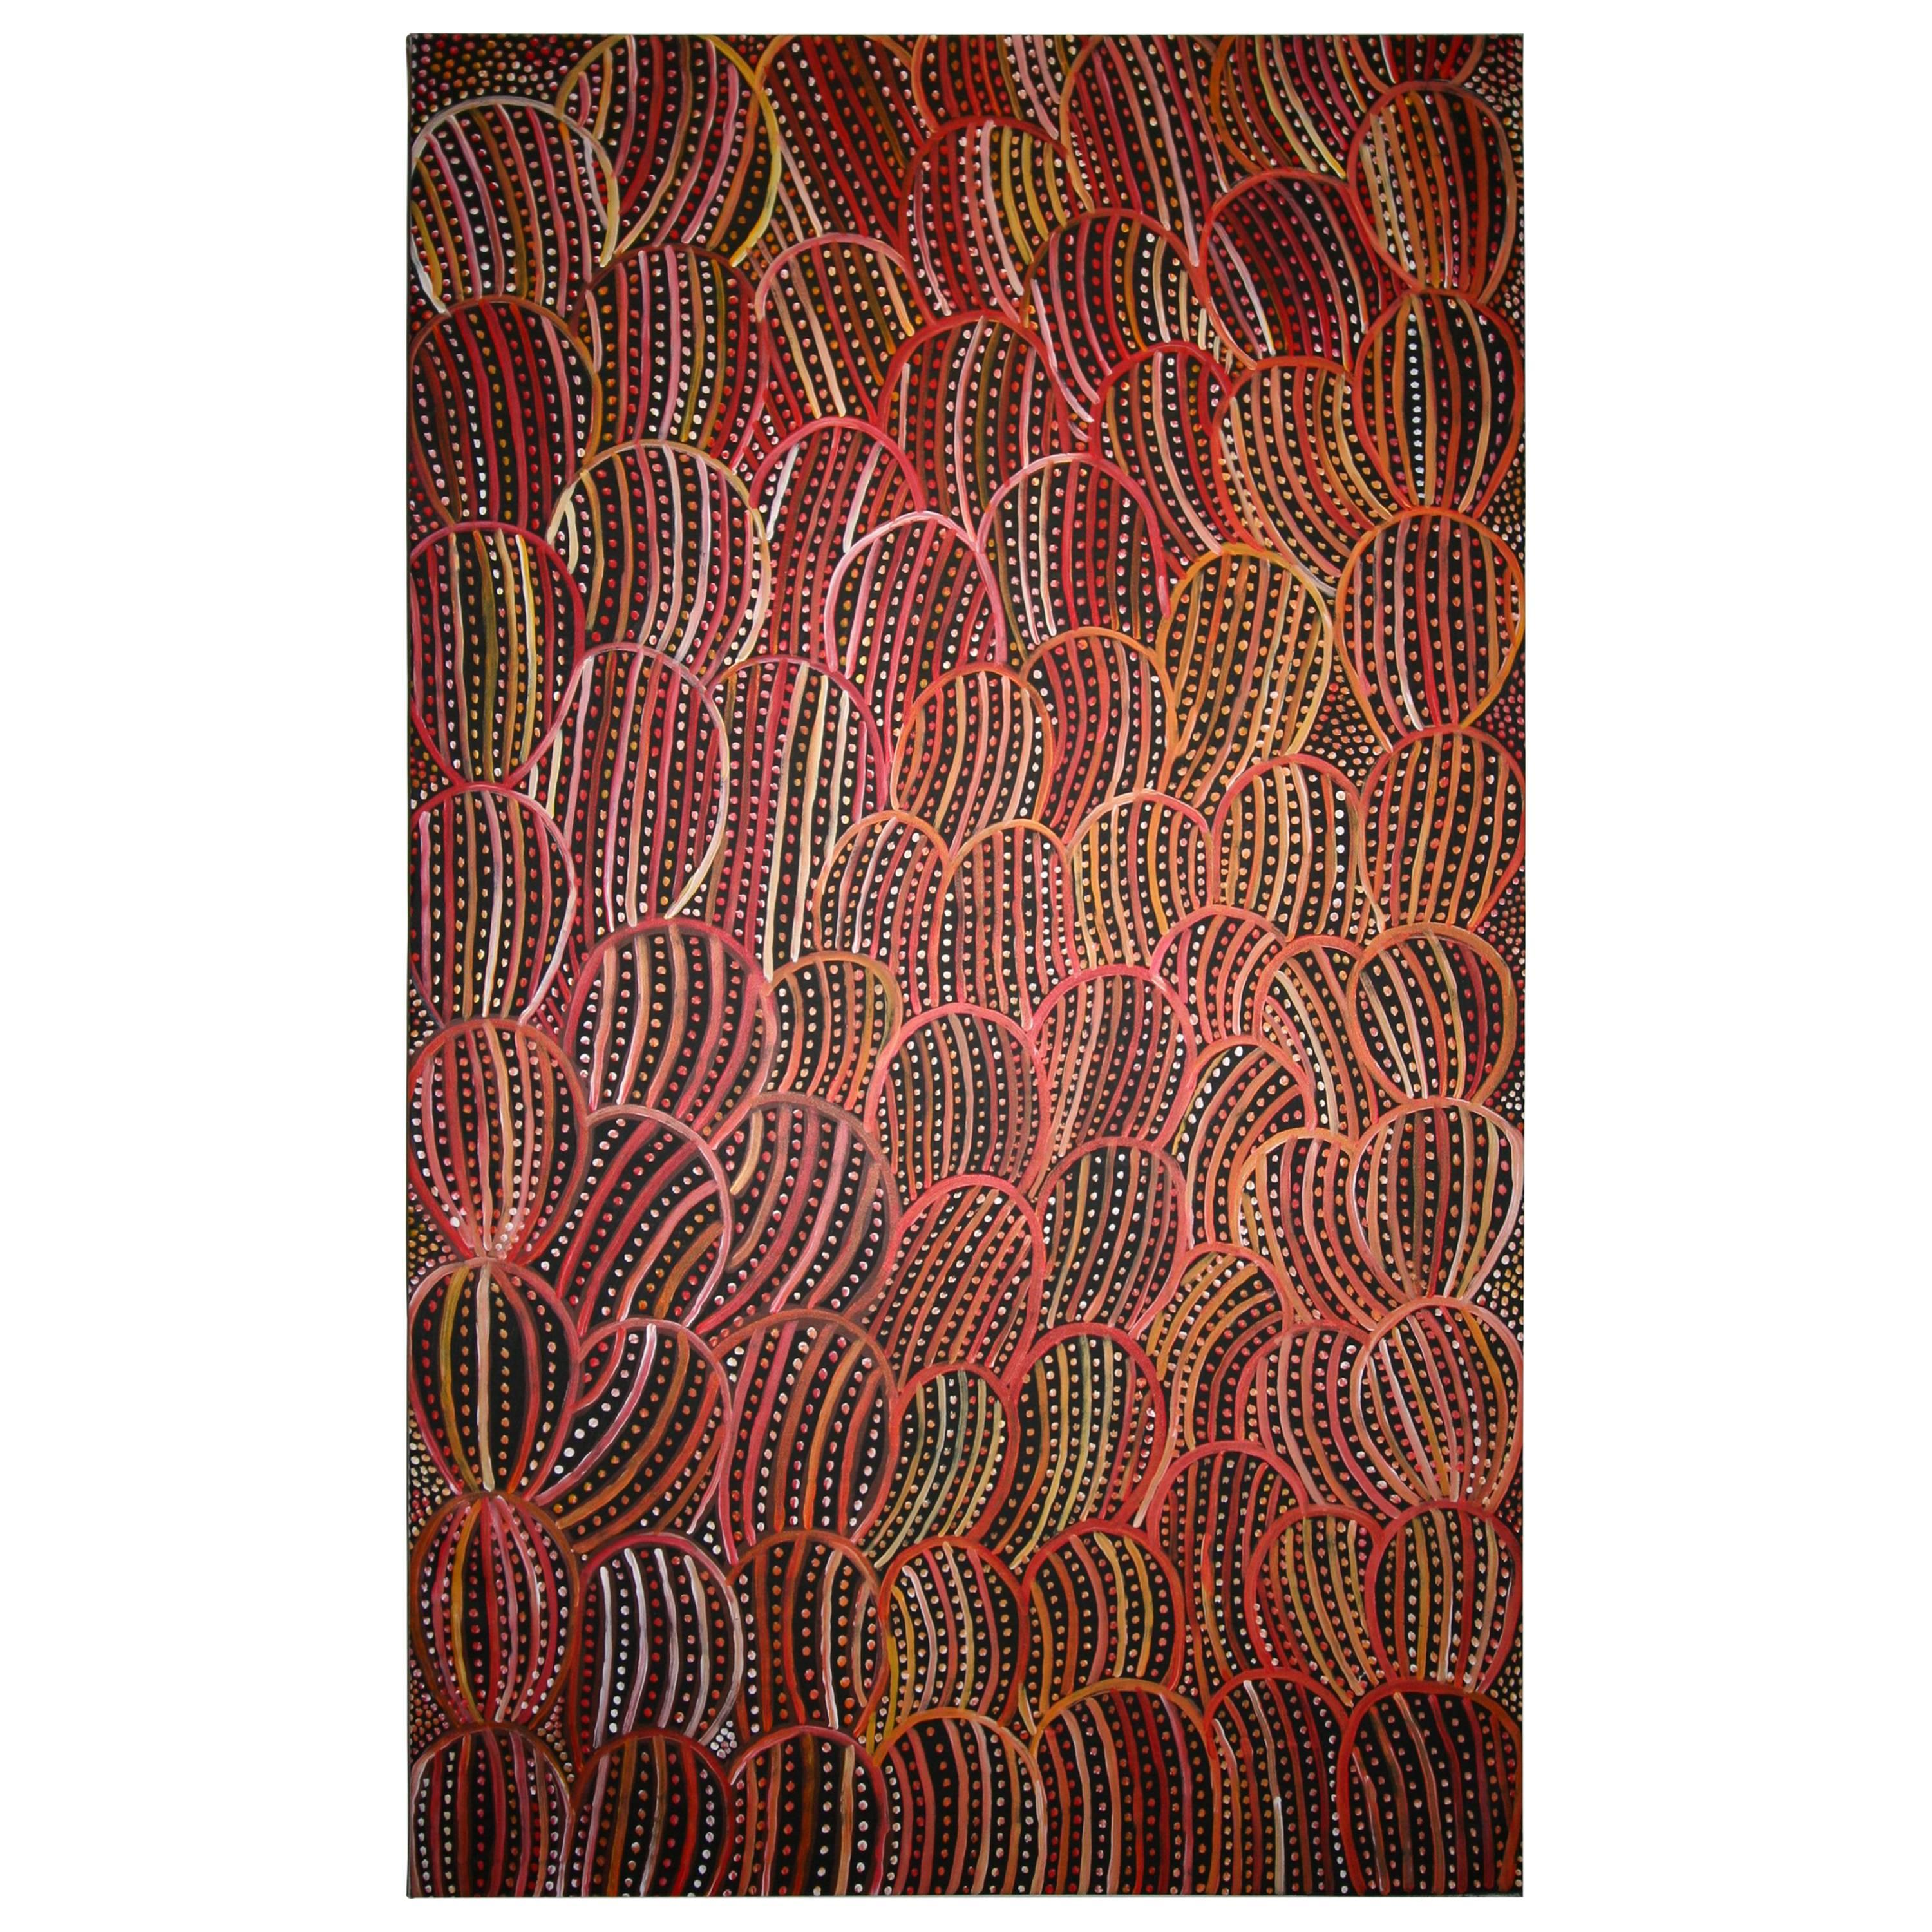 Australian Aboriginal Painting Anna Petyarre